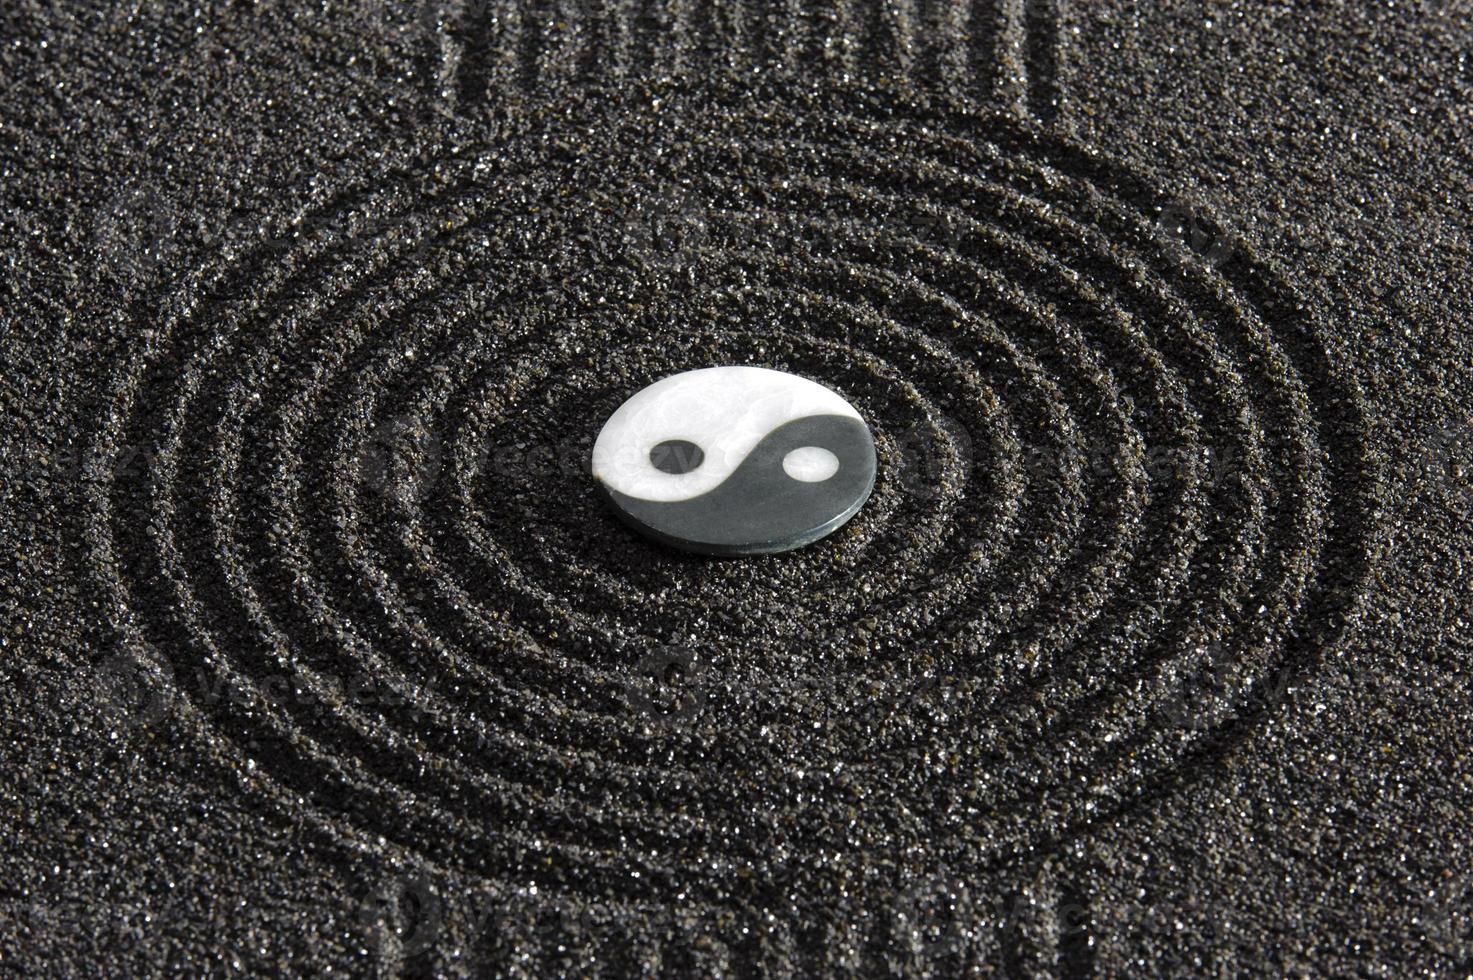 símbolo yin e yang no centro do jardim zen japonês foto